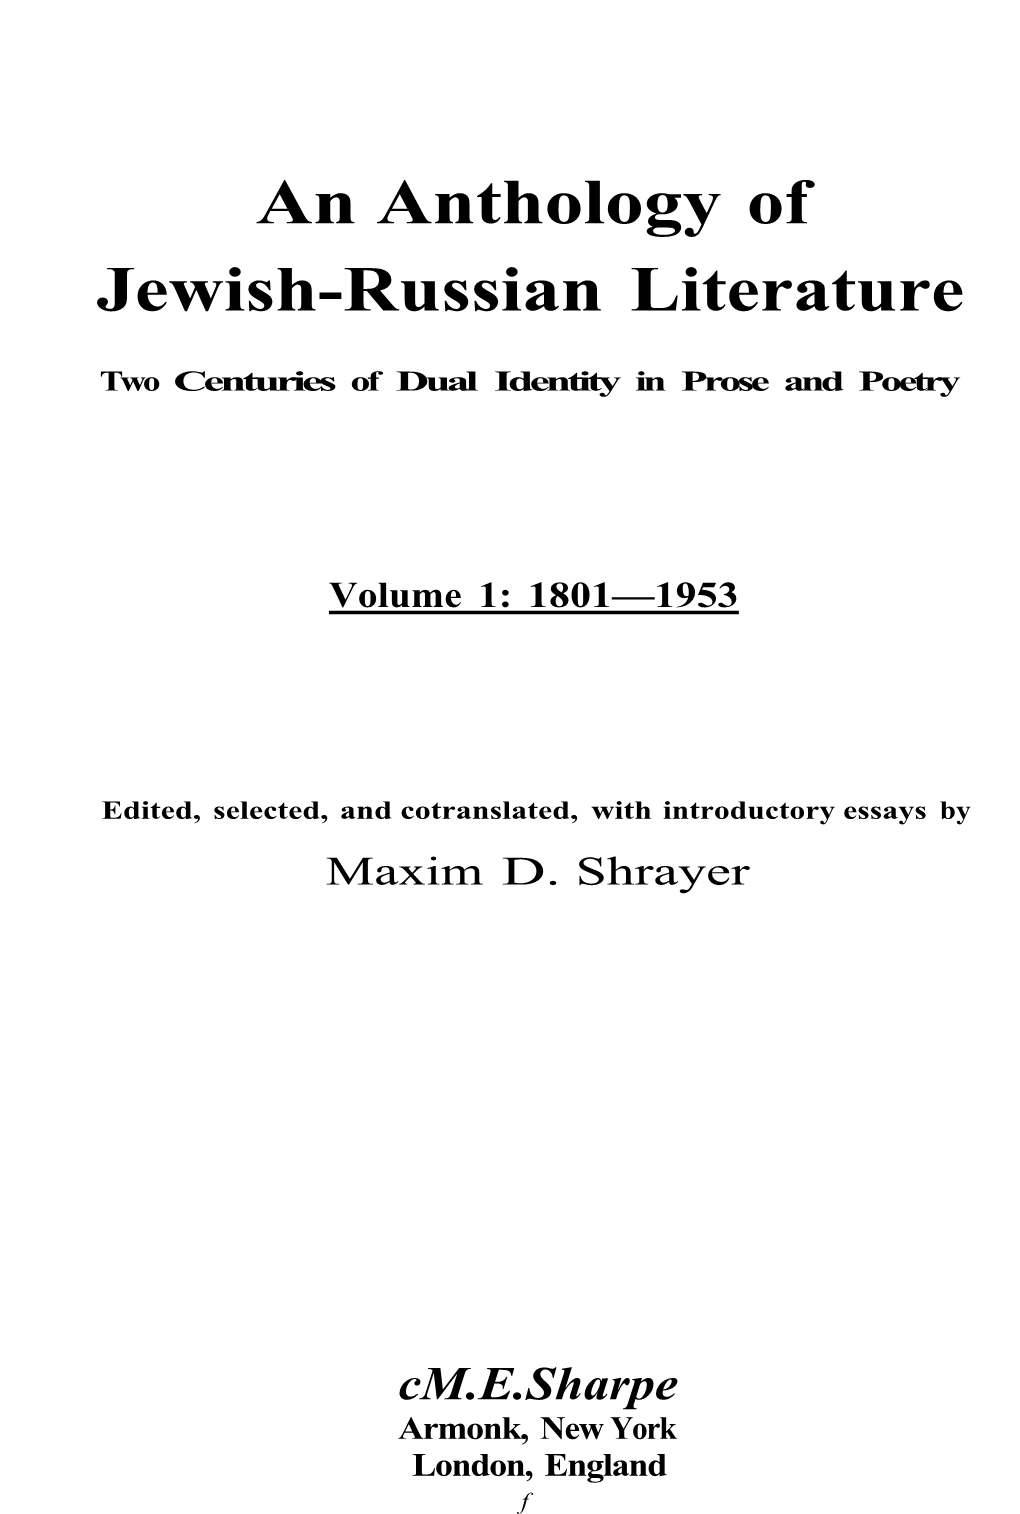 An Anthology of Jewish-Russian Literature